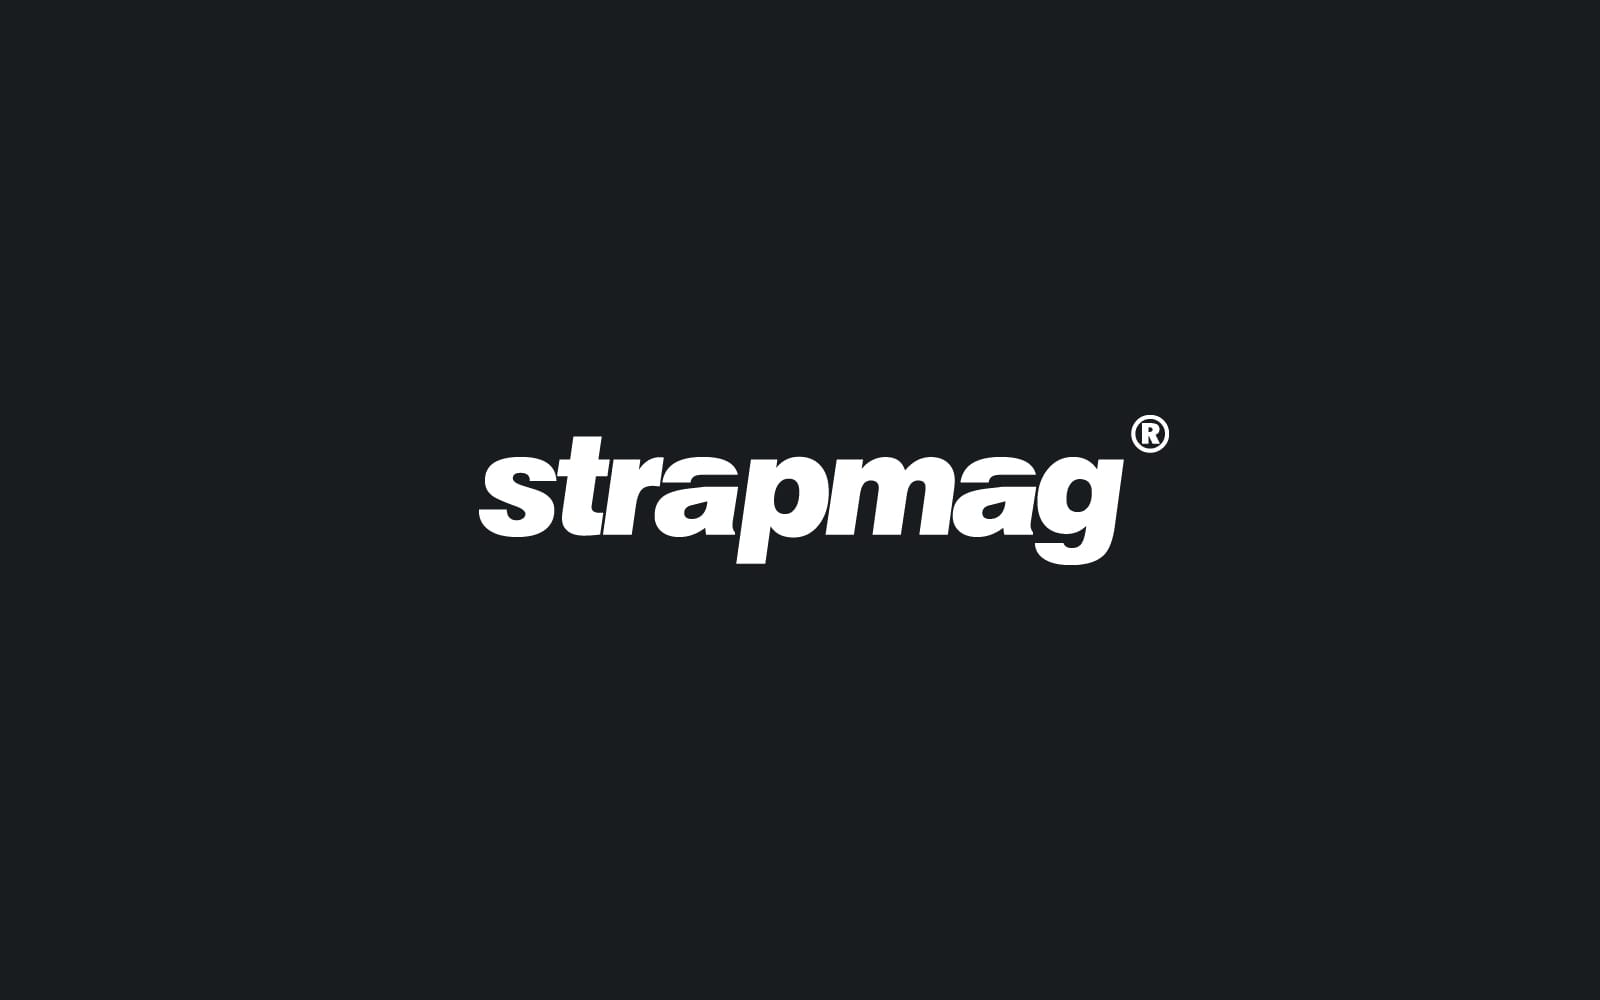 Strapmag logo firmowe